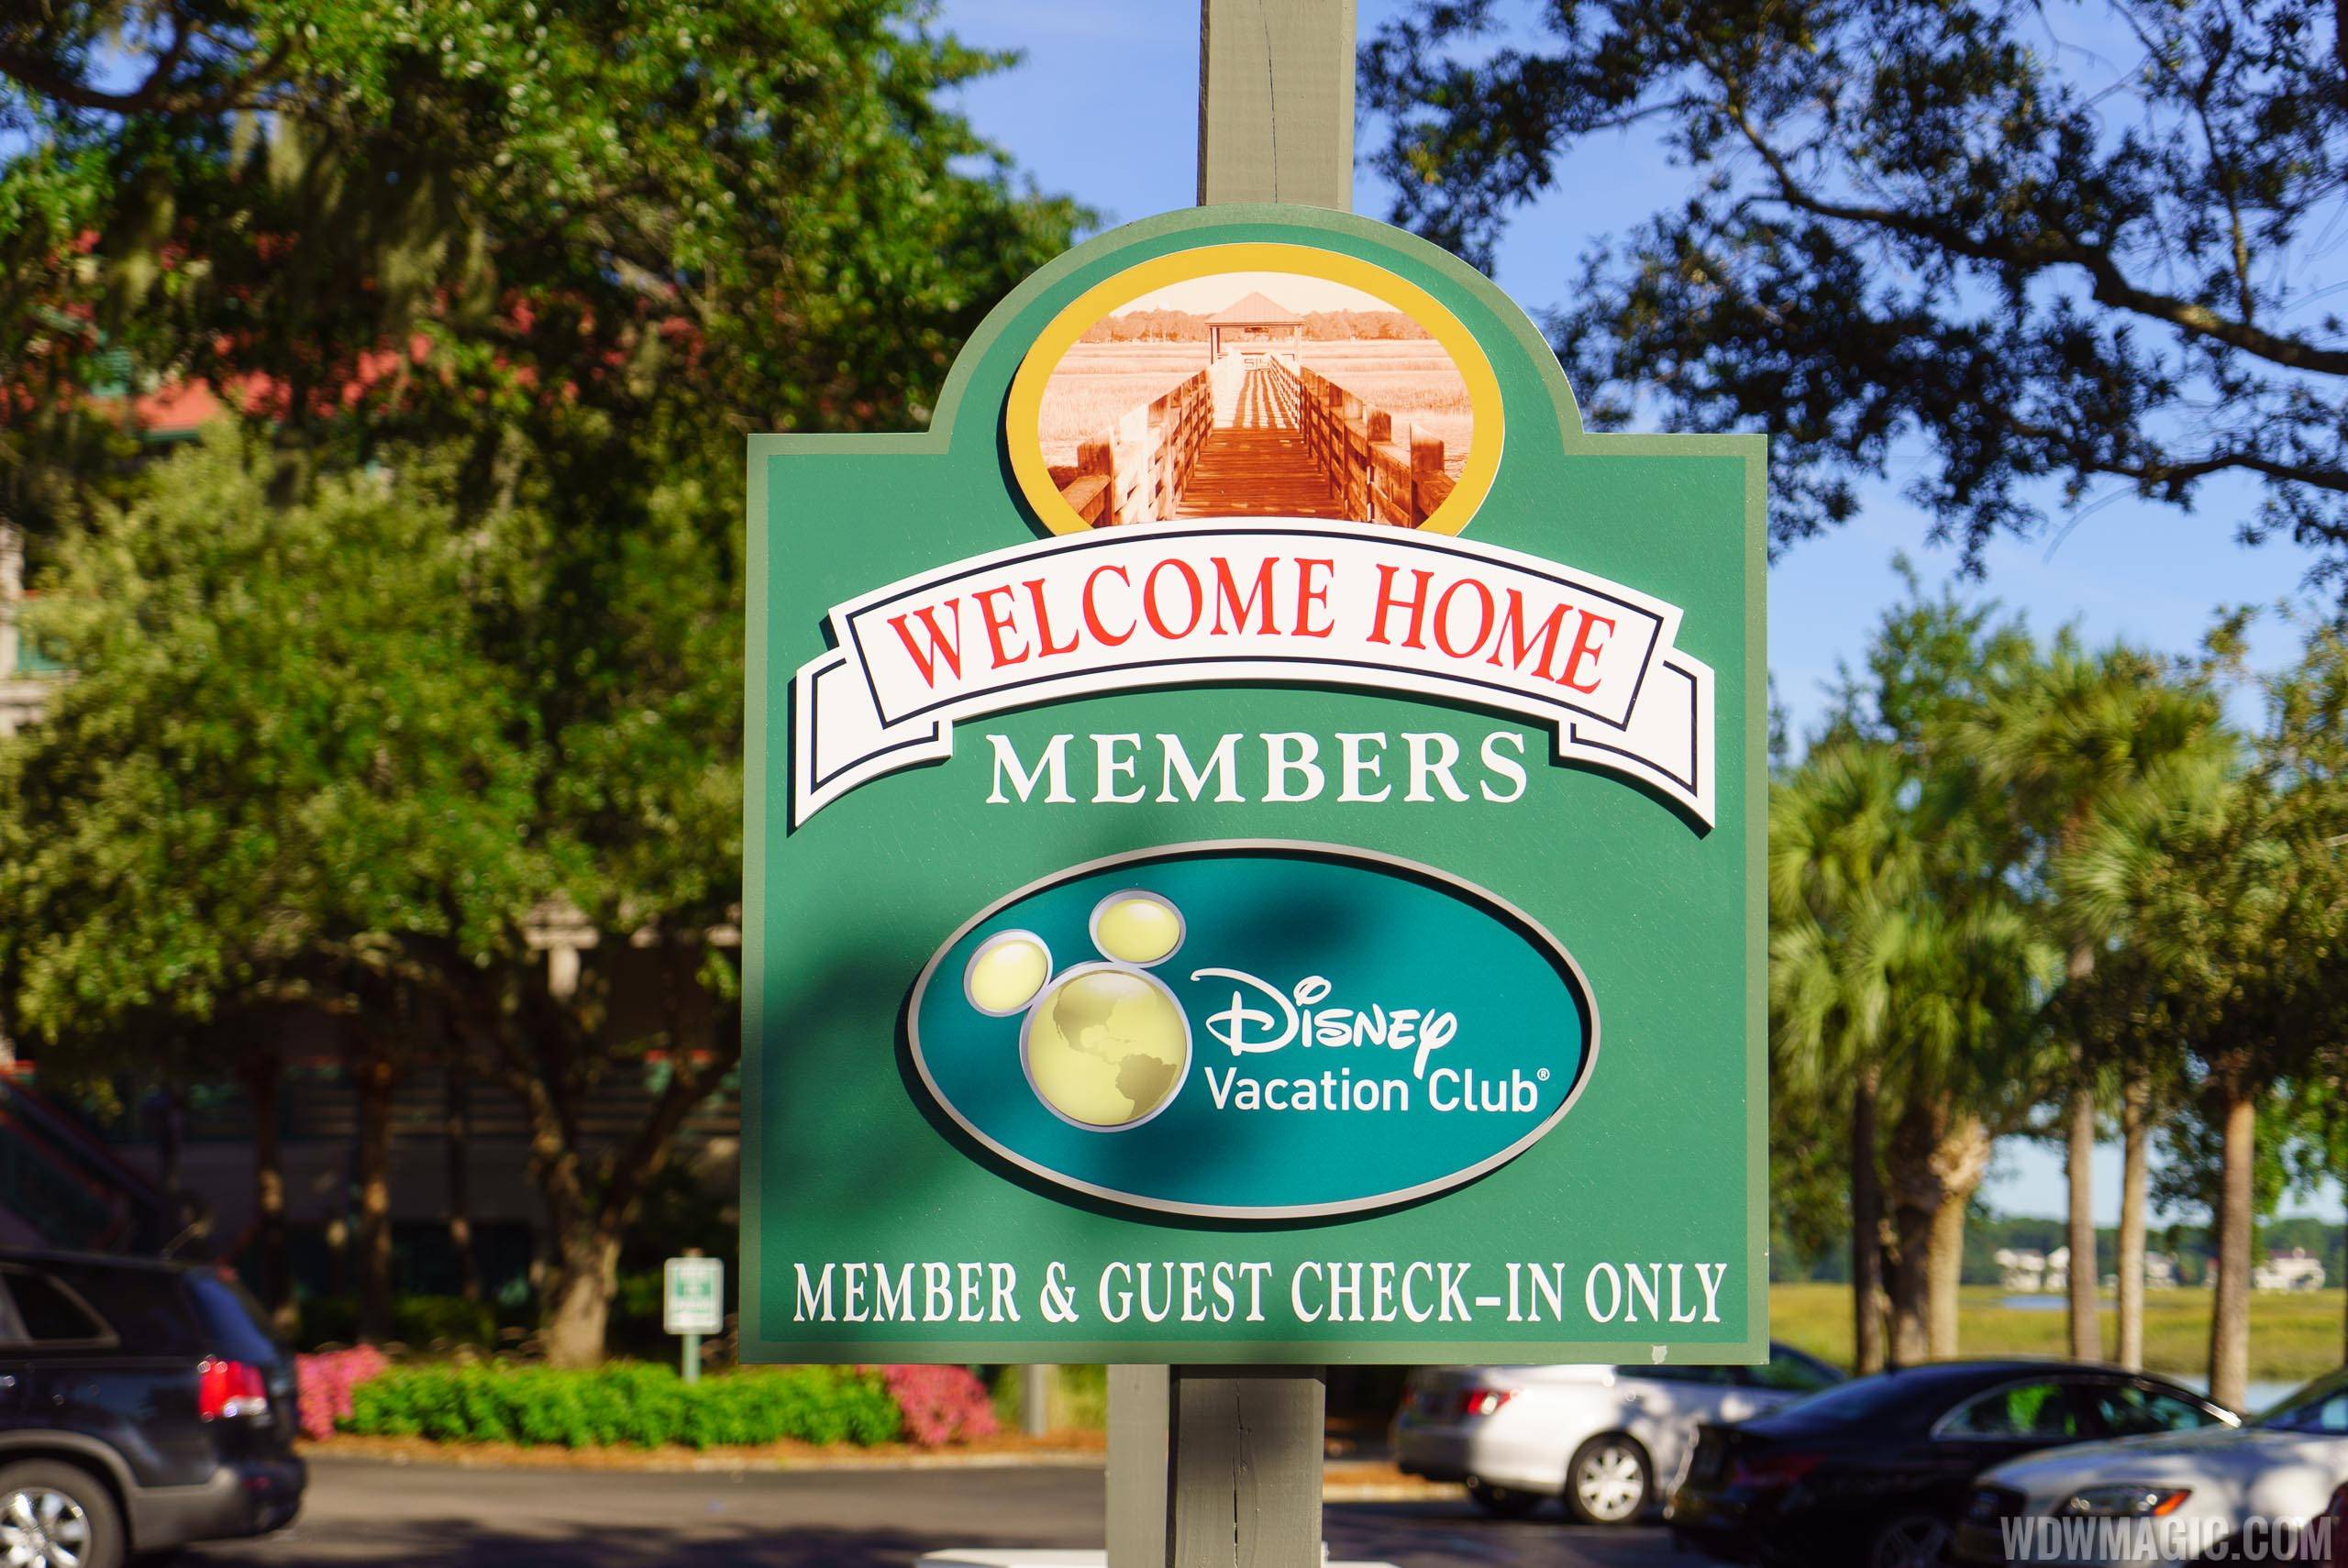 Disney's Hilton Head Island Resort - Welcome home